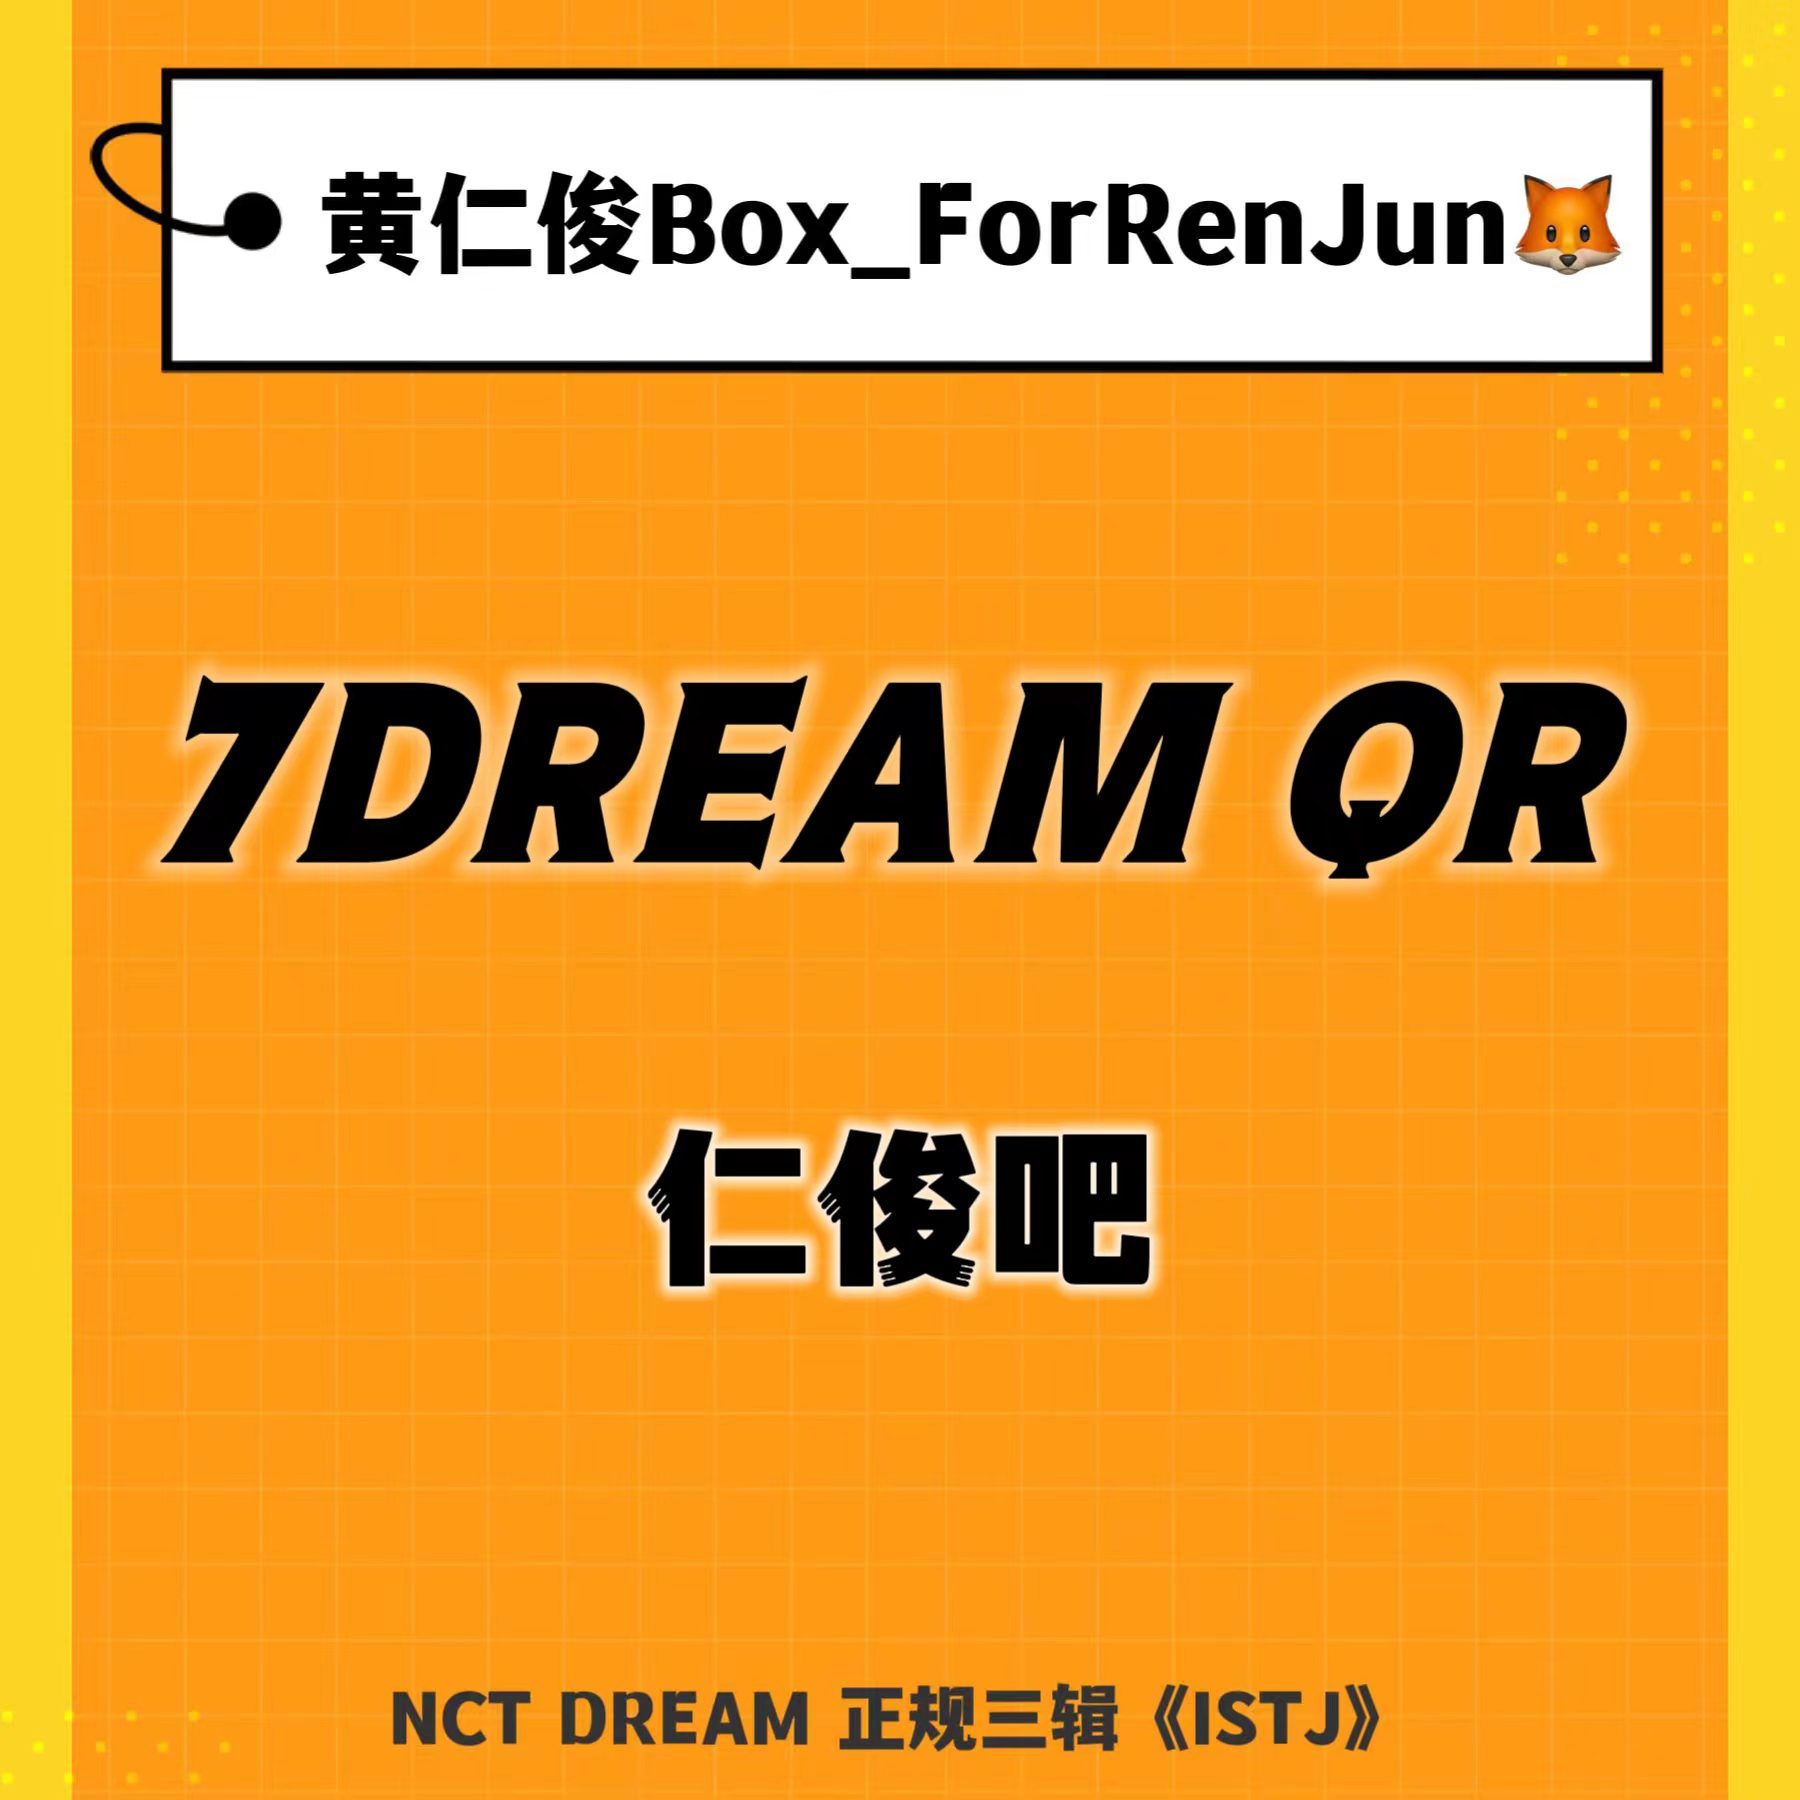 [全款 裸专] NCT DREAM - 正规3辑 [ISTJ] (7DREAM QR Ver.) (Smart Album) (随机版本)_黄仁俊吧RenJunBar